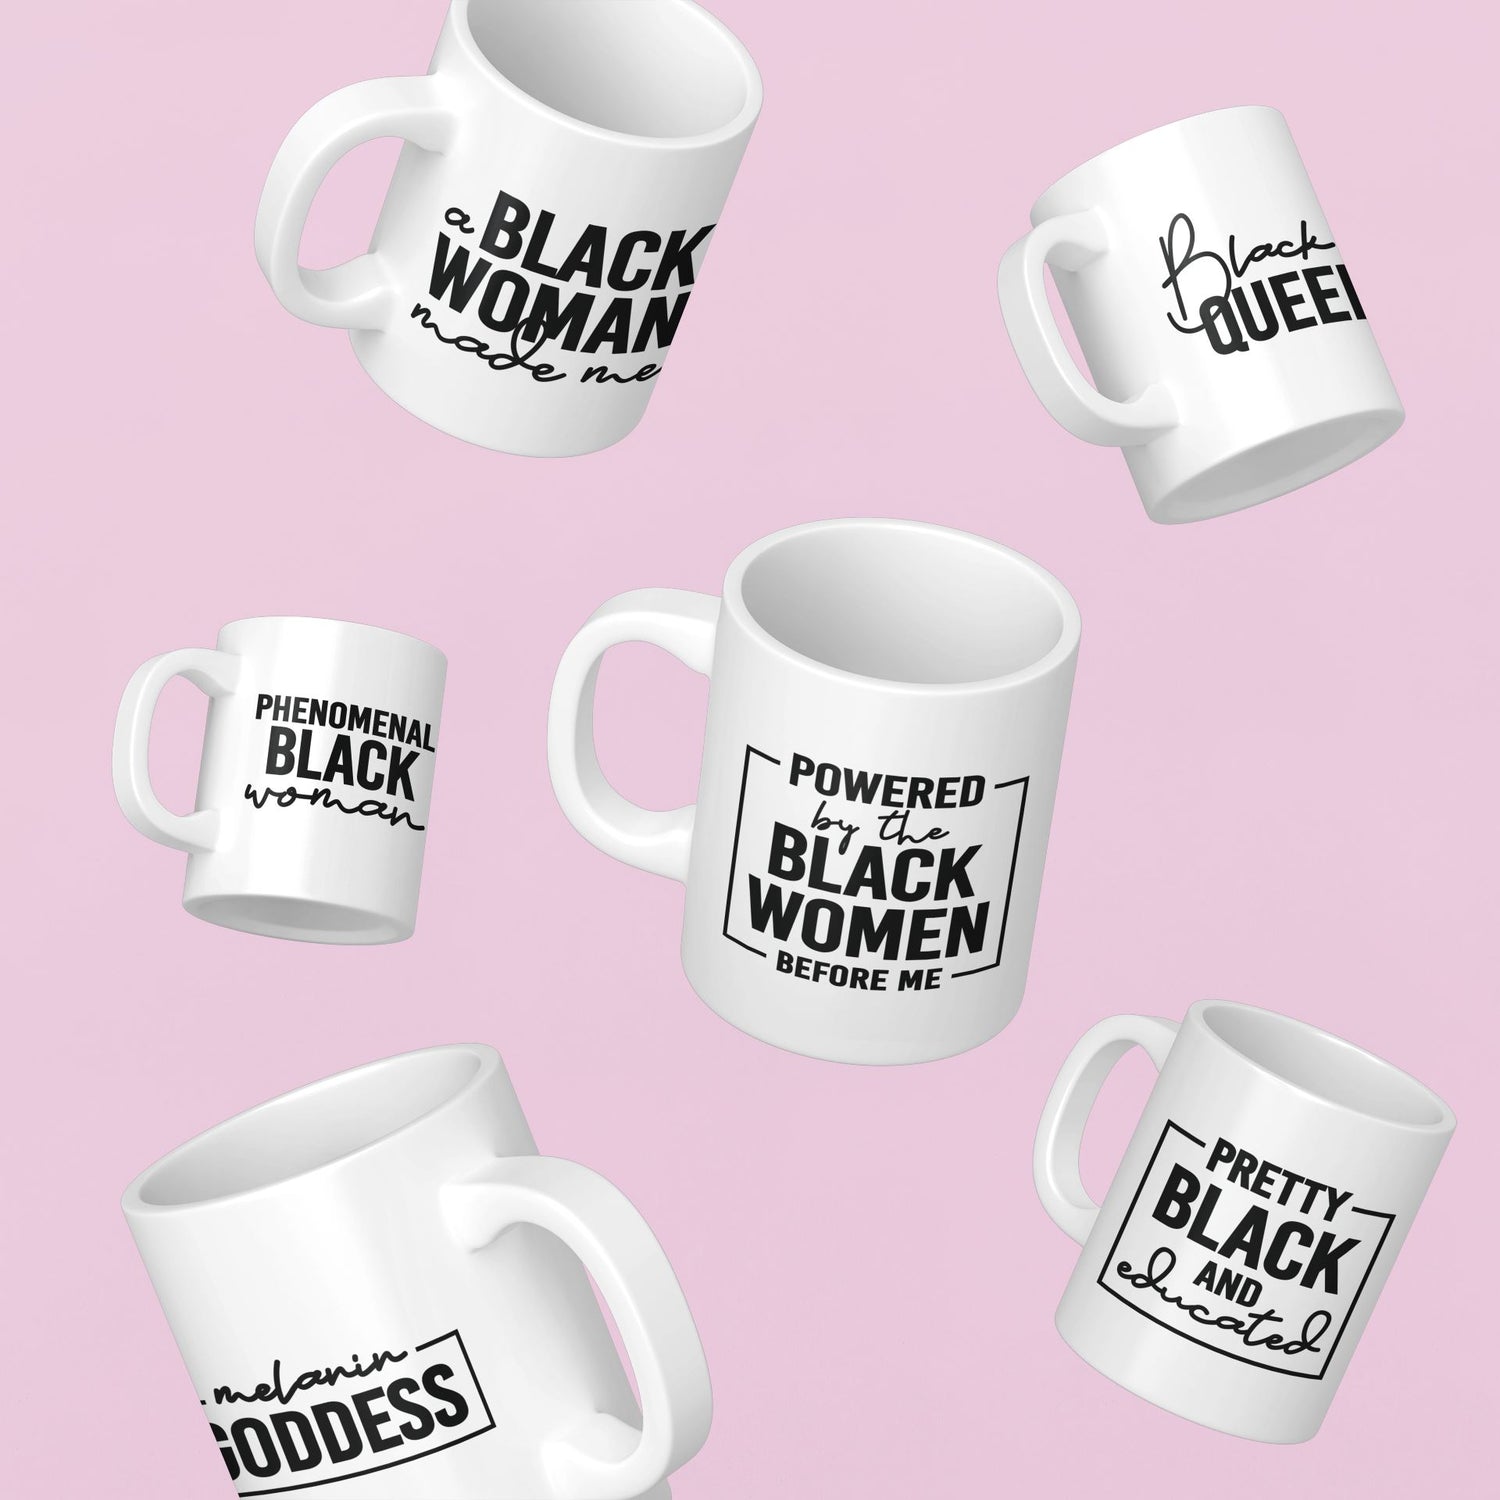 Black and Educated Mug / Black Queen Mug / Melanin Goddess Mug Travel Cup/Mug B1ack By Design LLC 